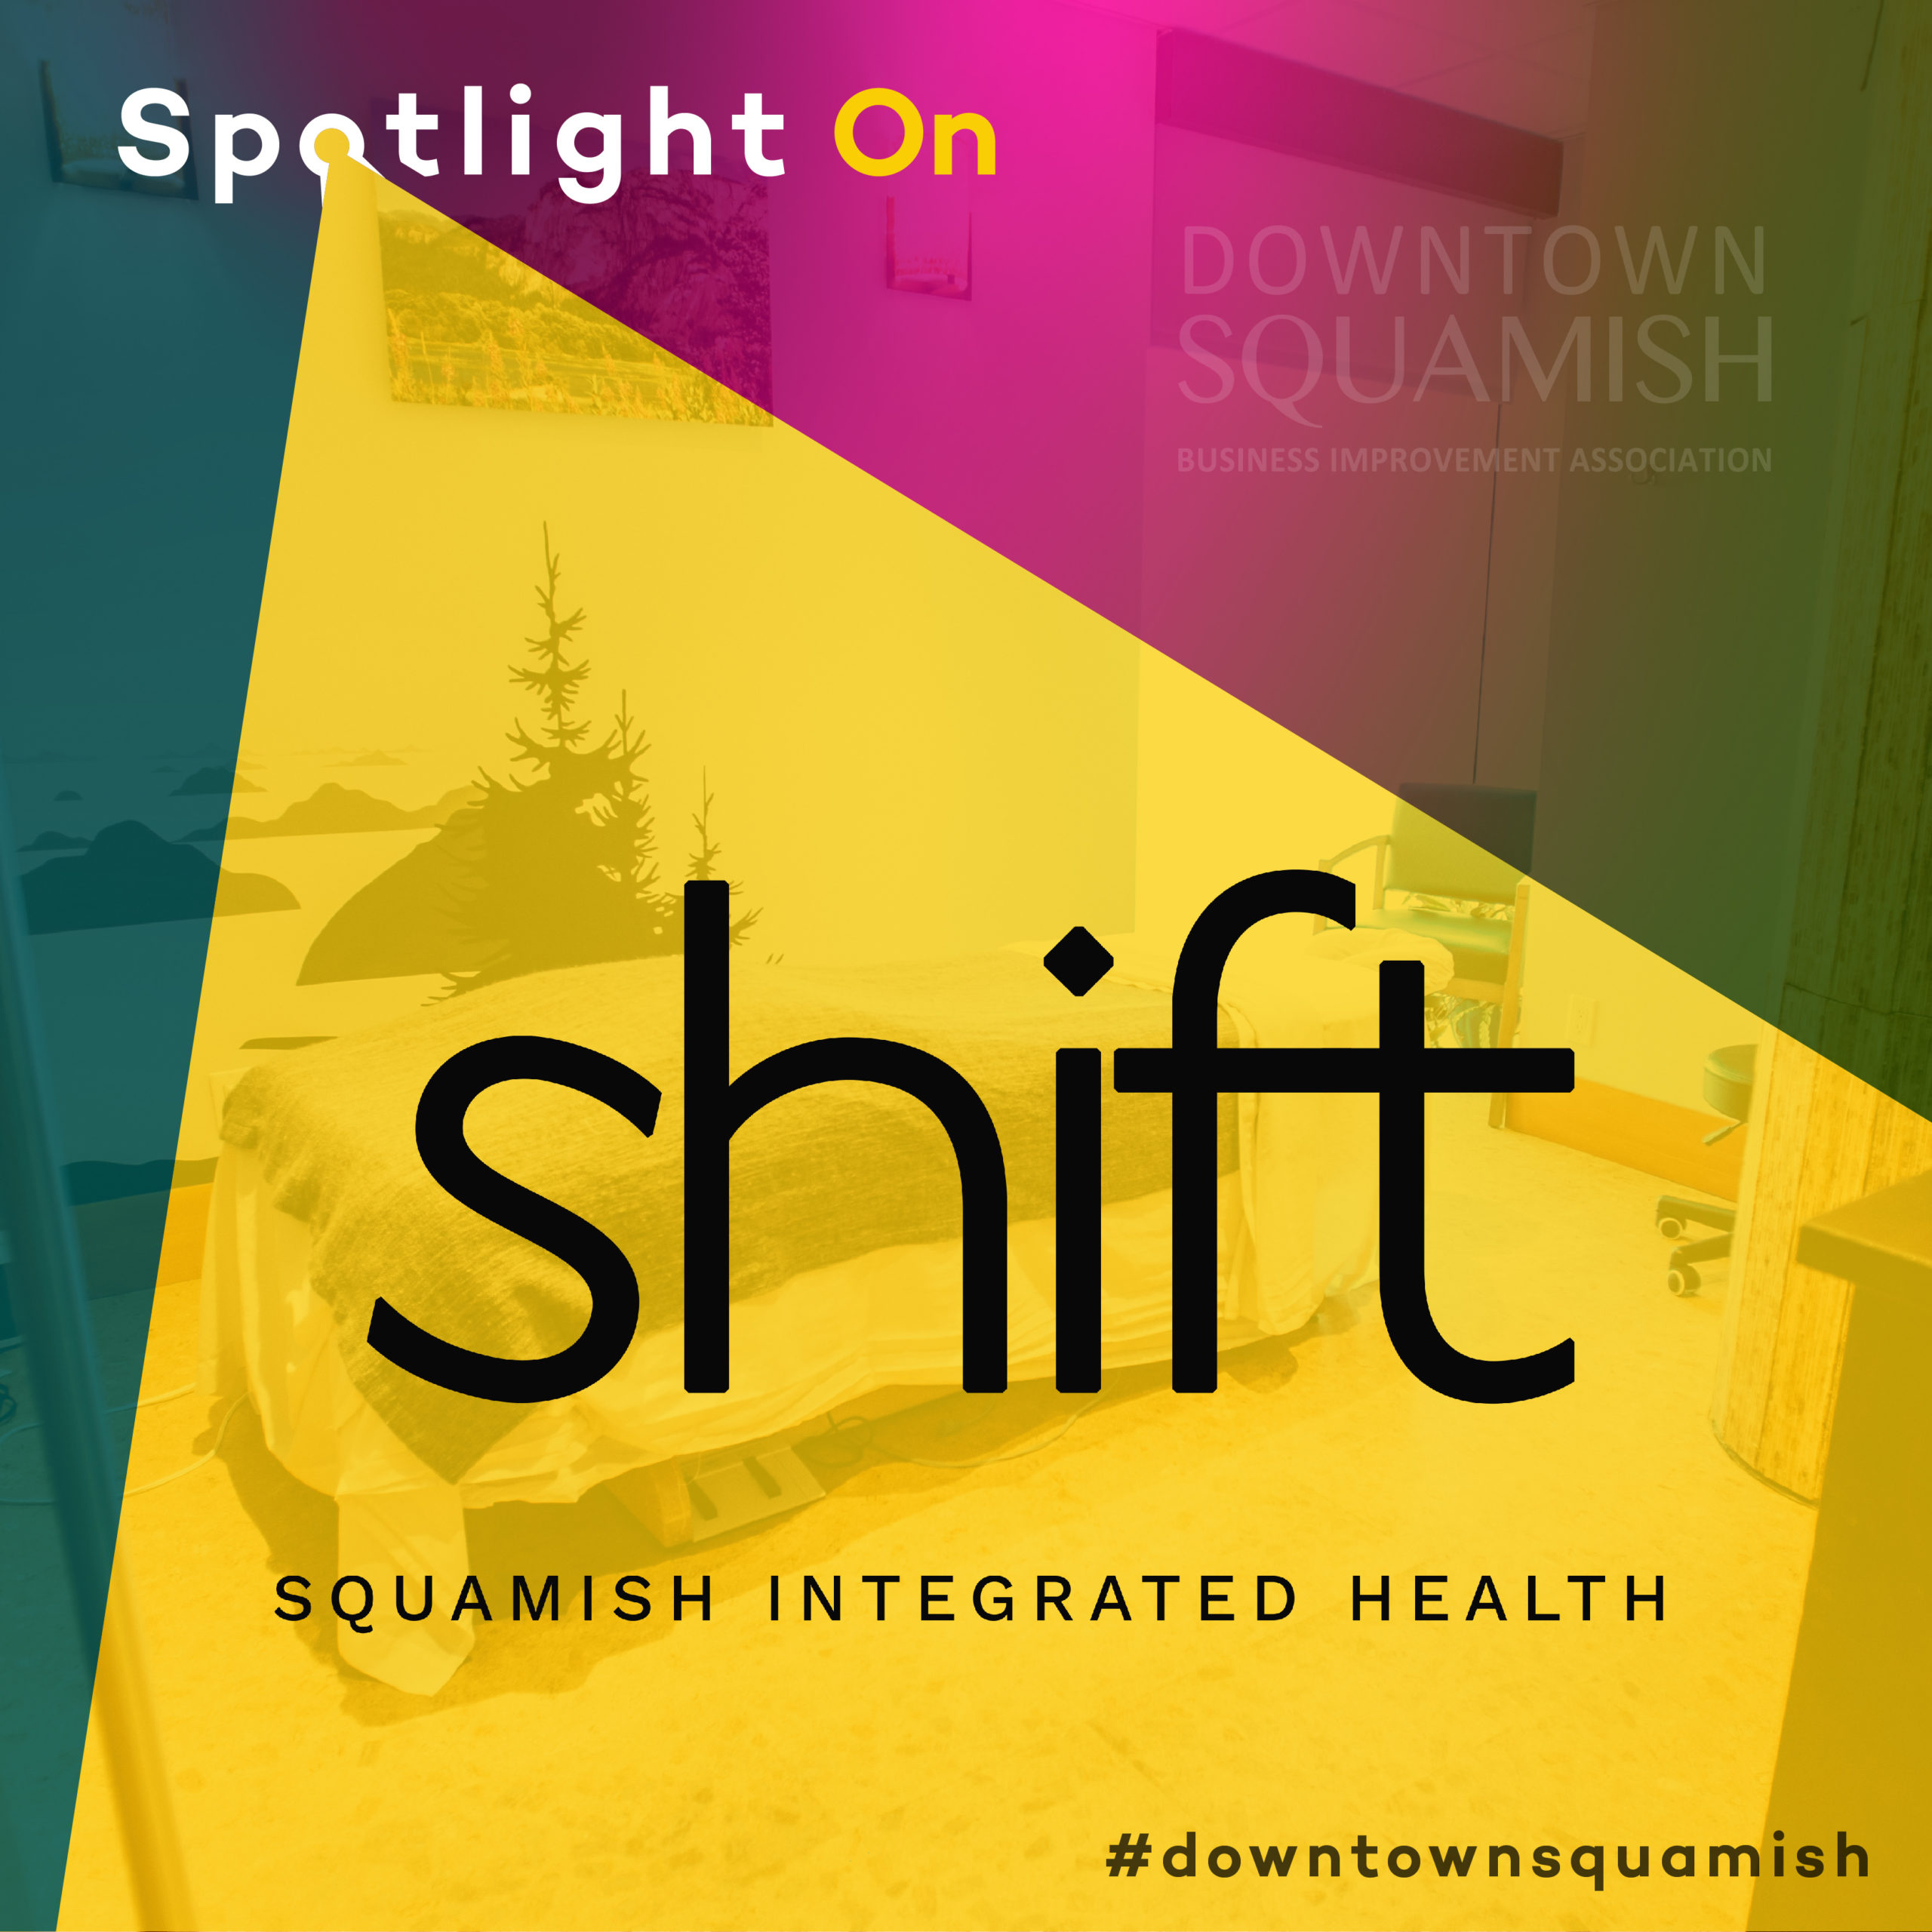 https://www.downtownsquamish.com/wp-content/uploads/2020/08/Spotlight_On_SHIFT-scaled.jpg